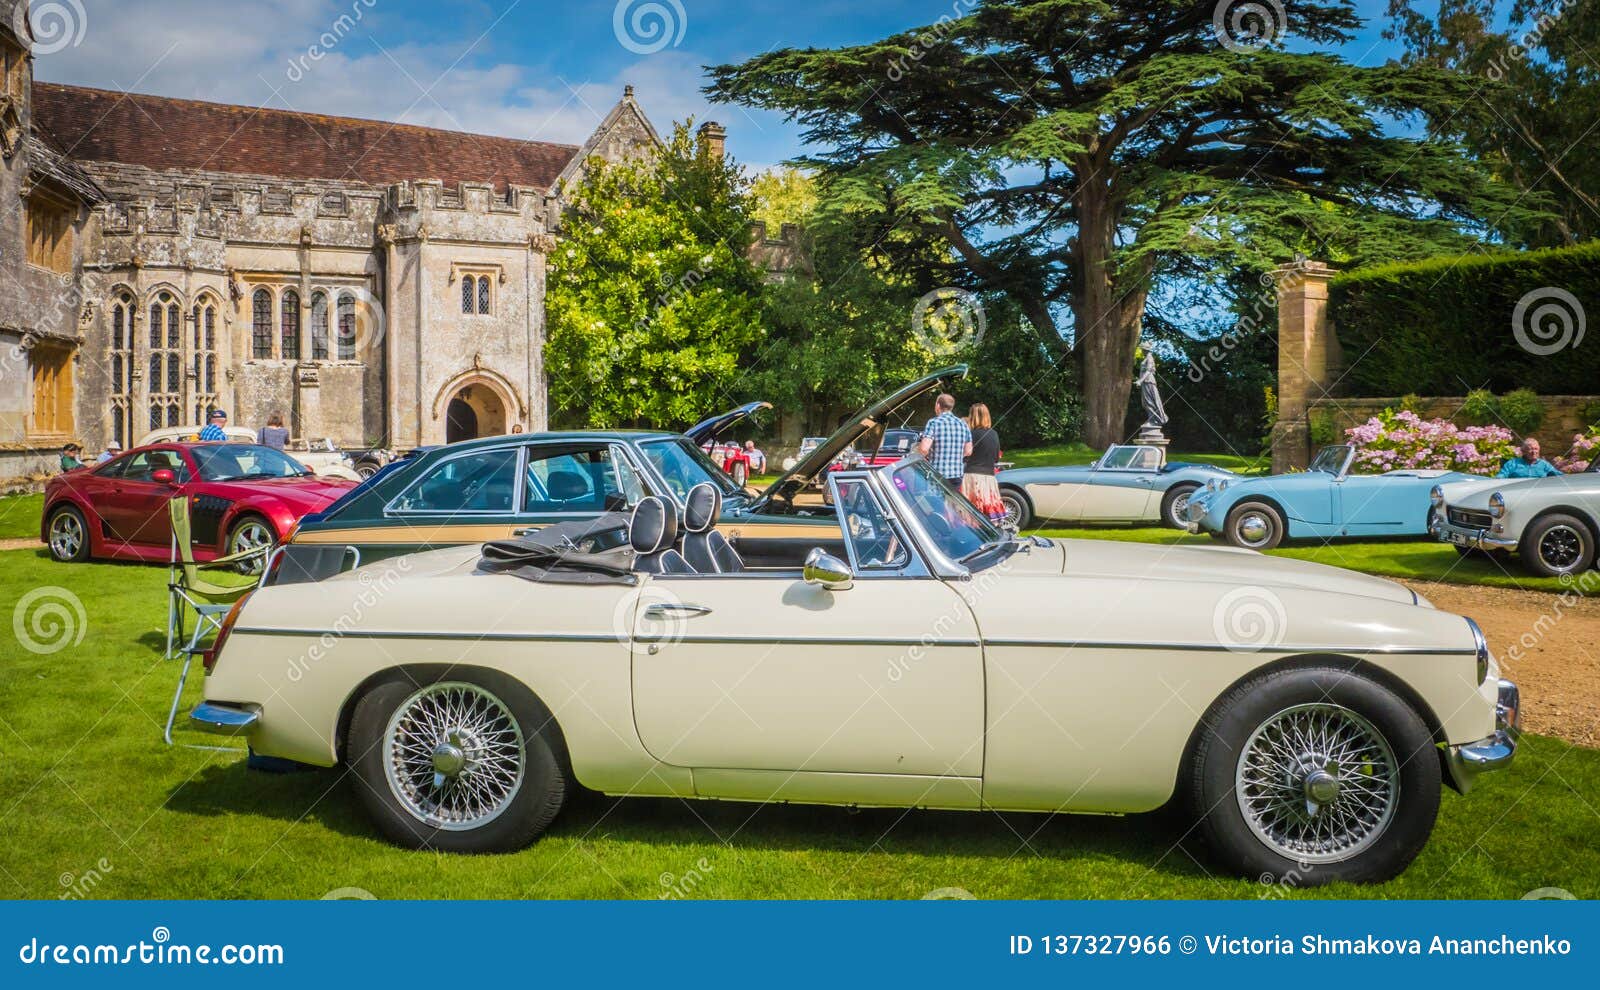 Classic MG Cars at Athelhampton House in Dorset, United Kingdom